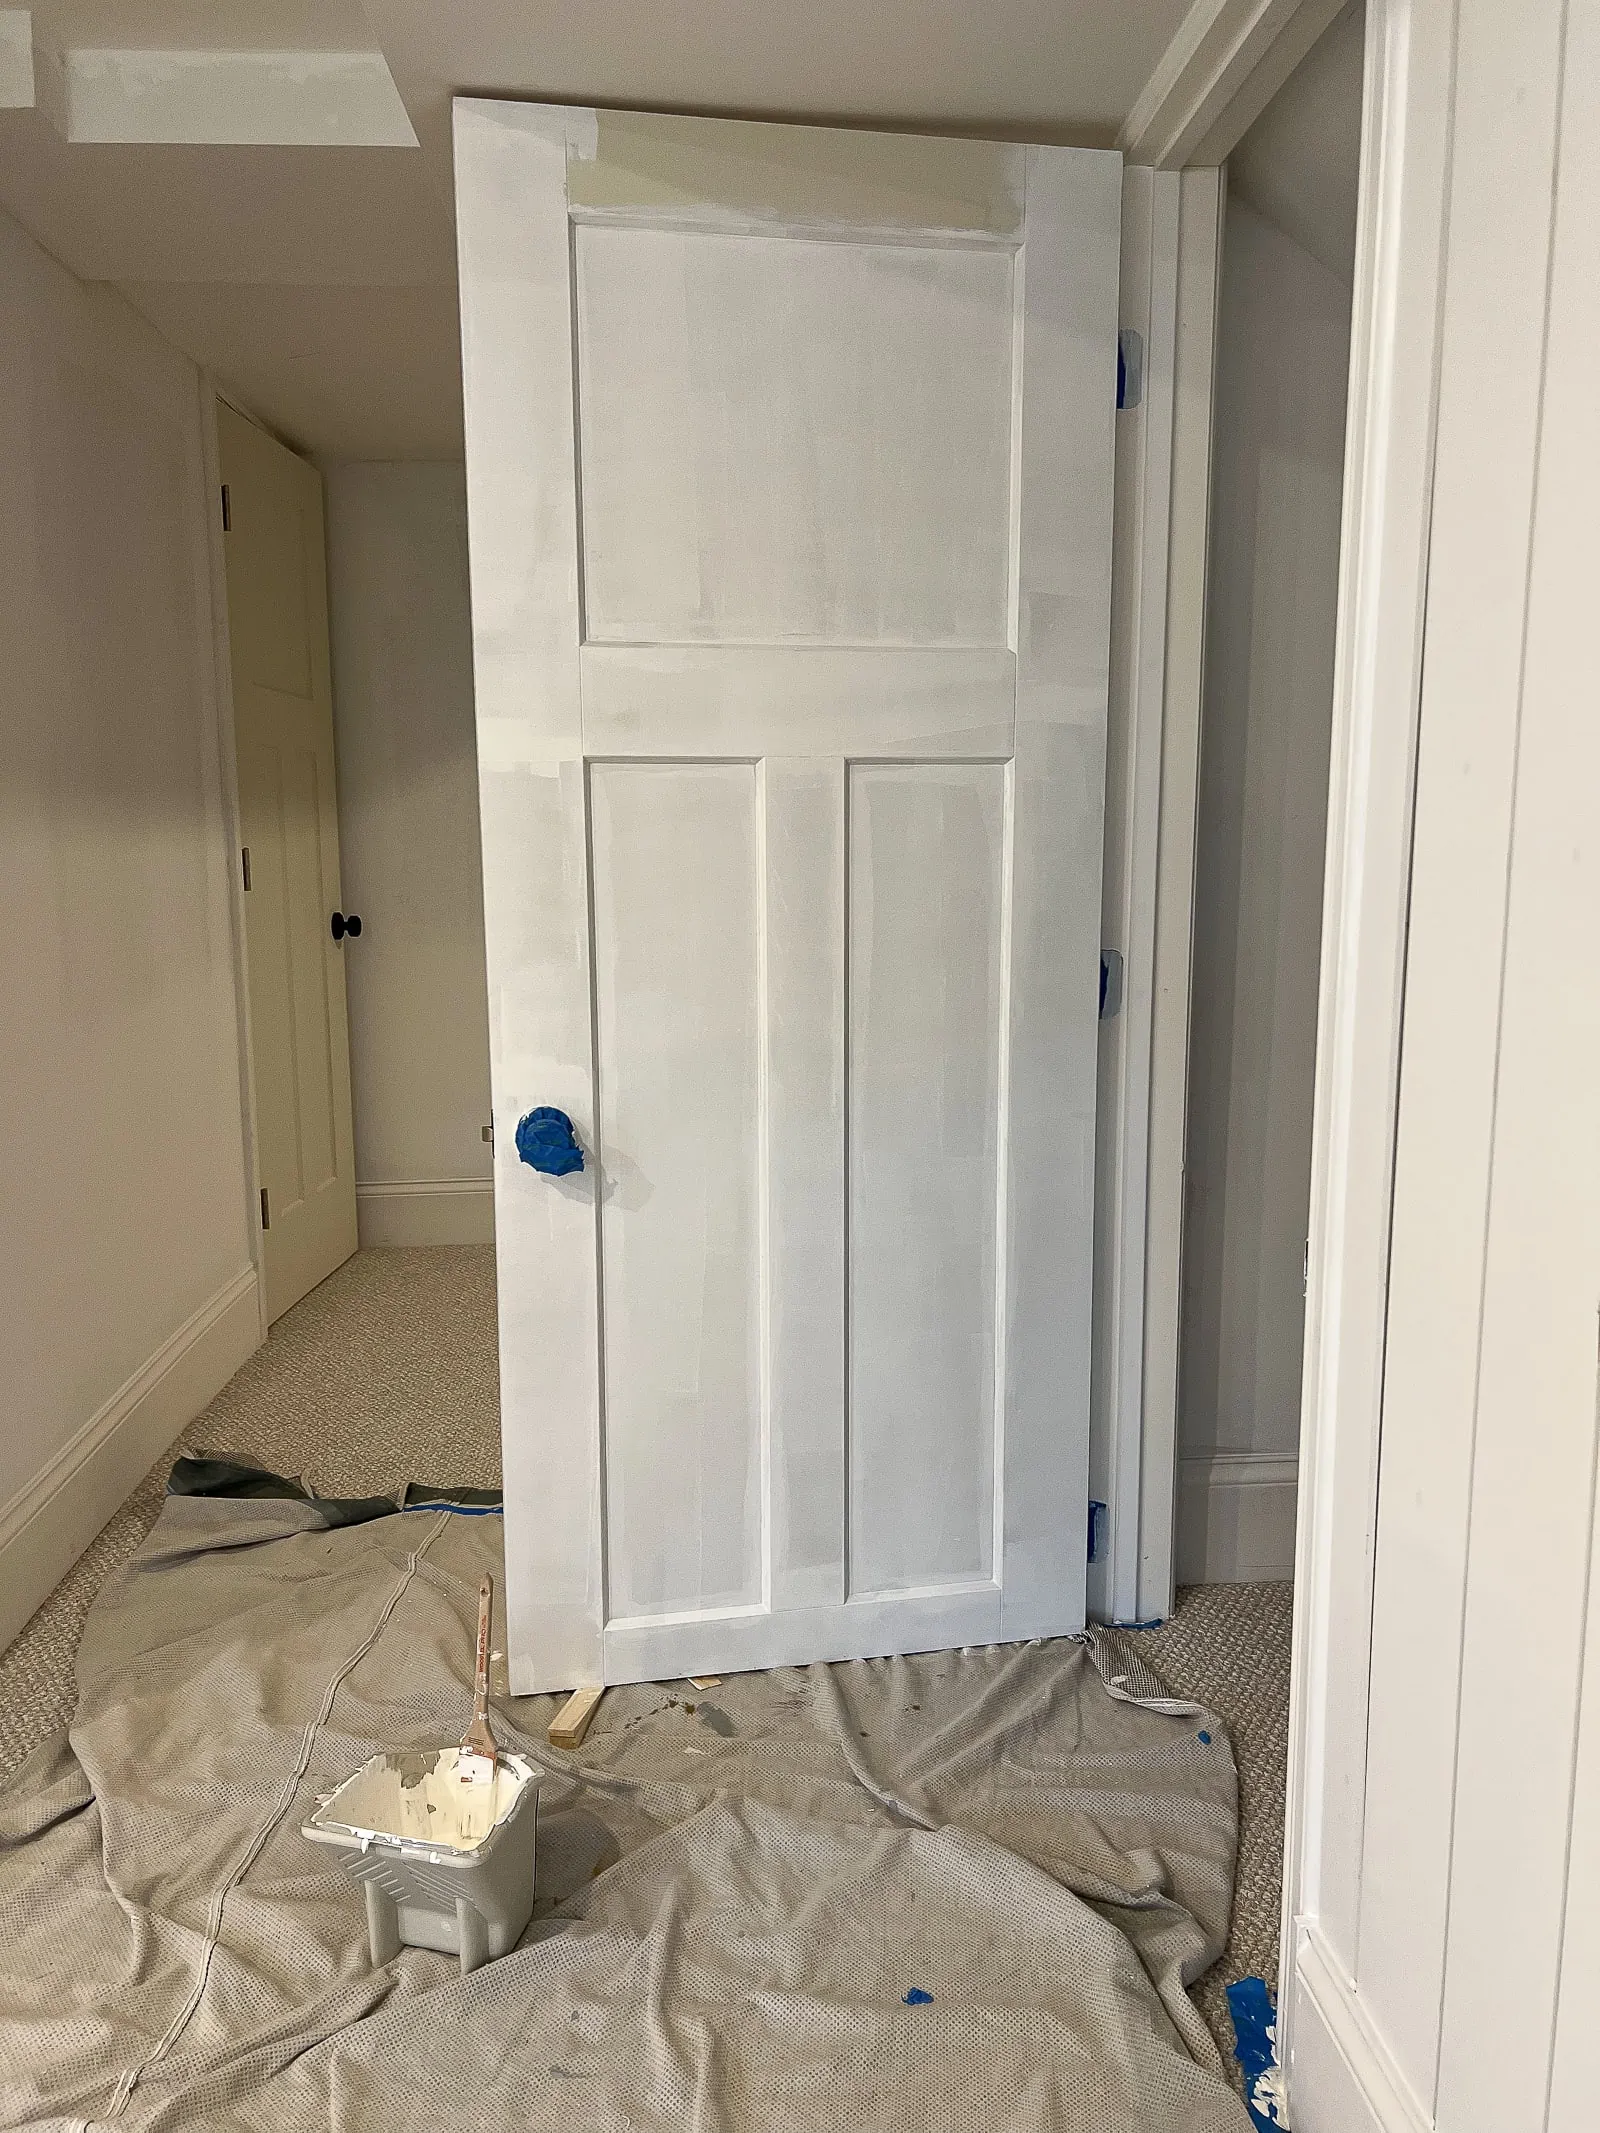 How to paint interior doors